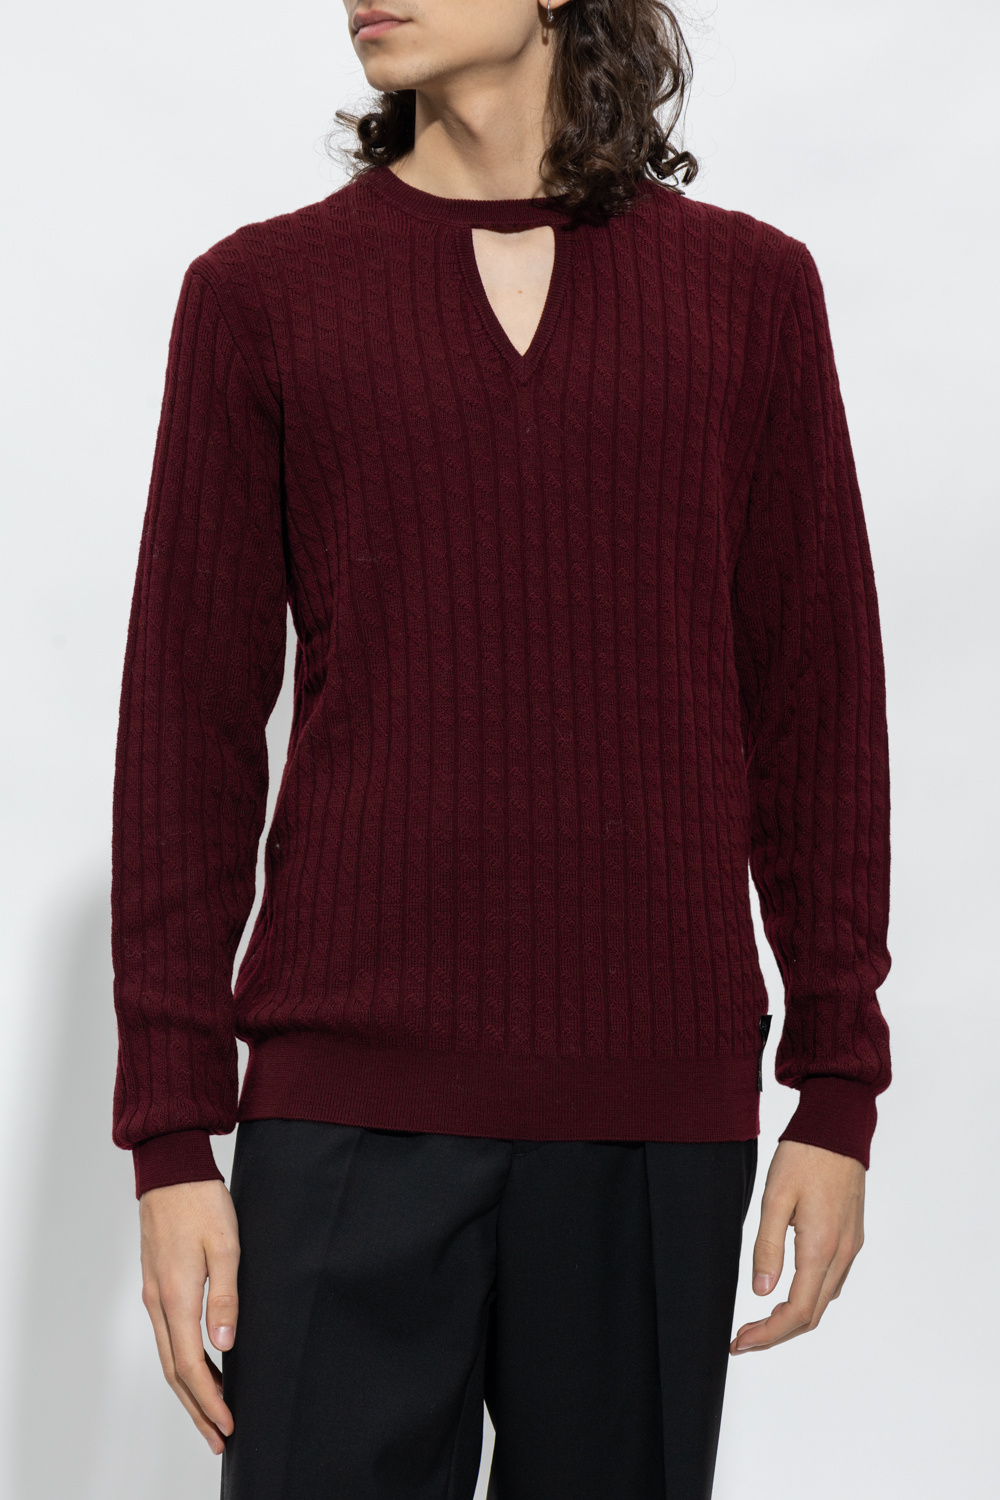 Fendi over Wool sweater